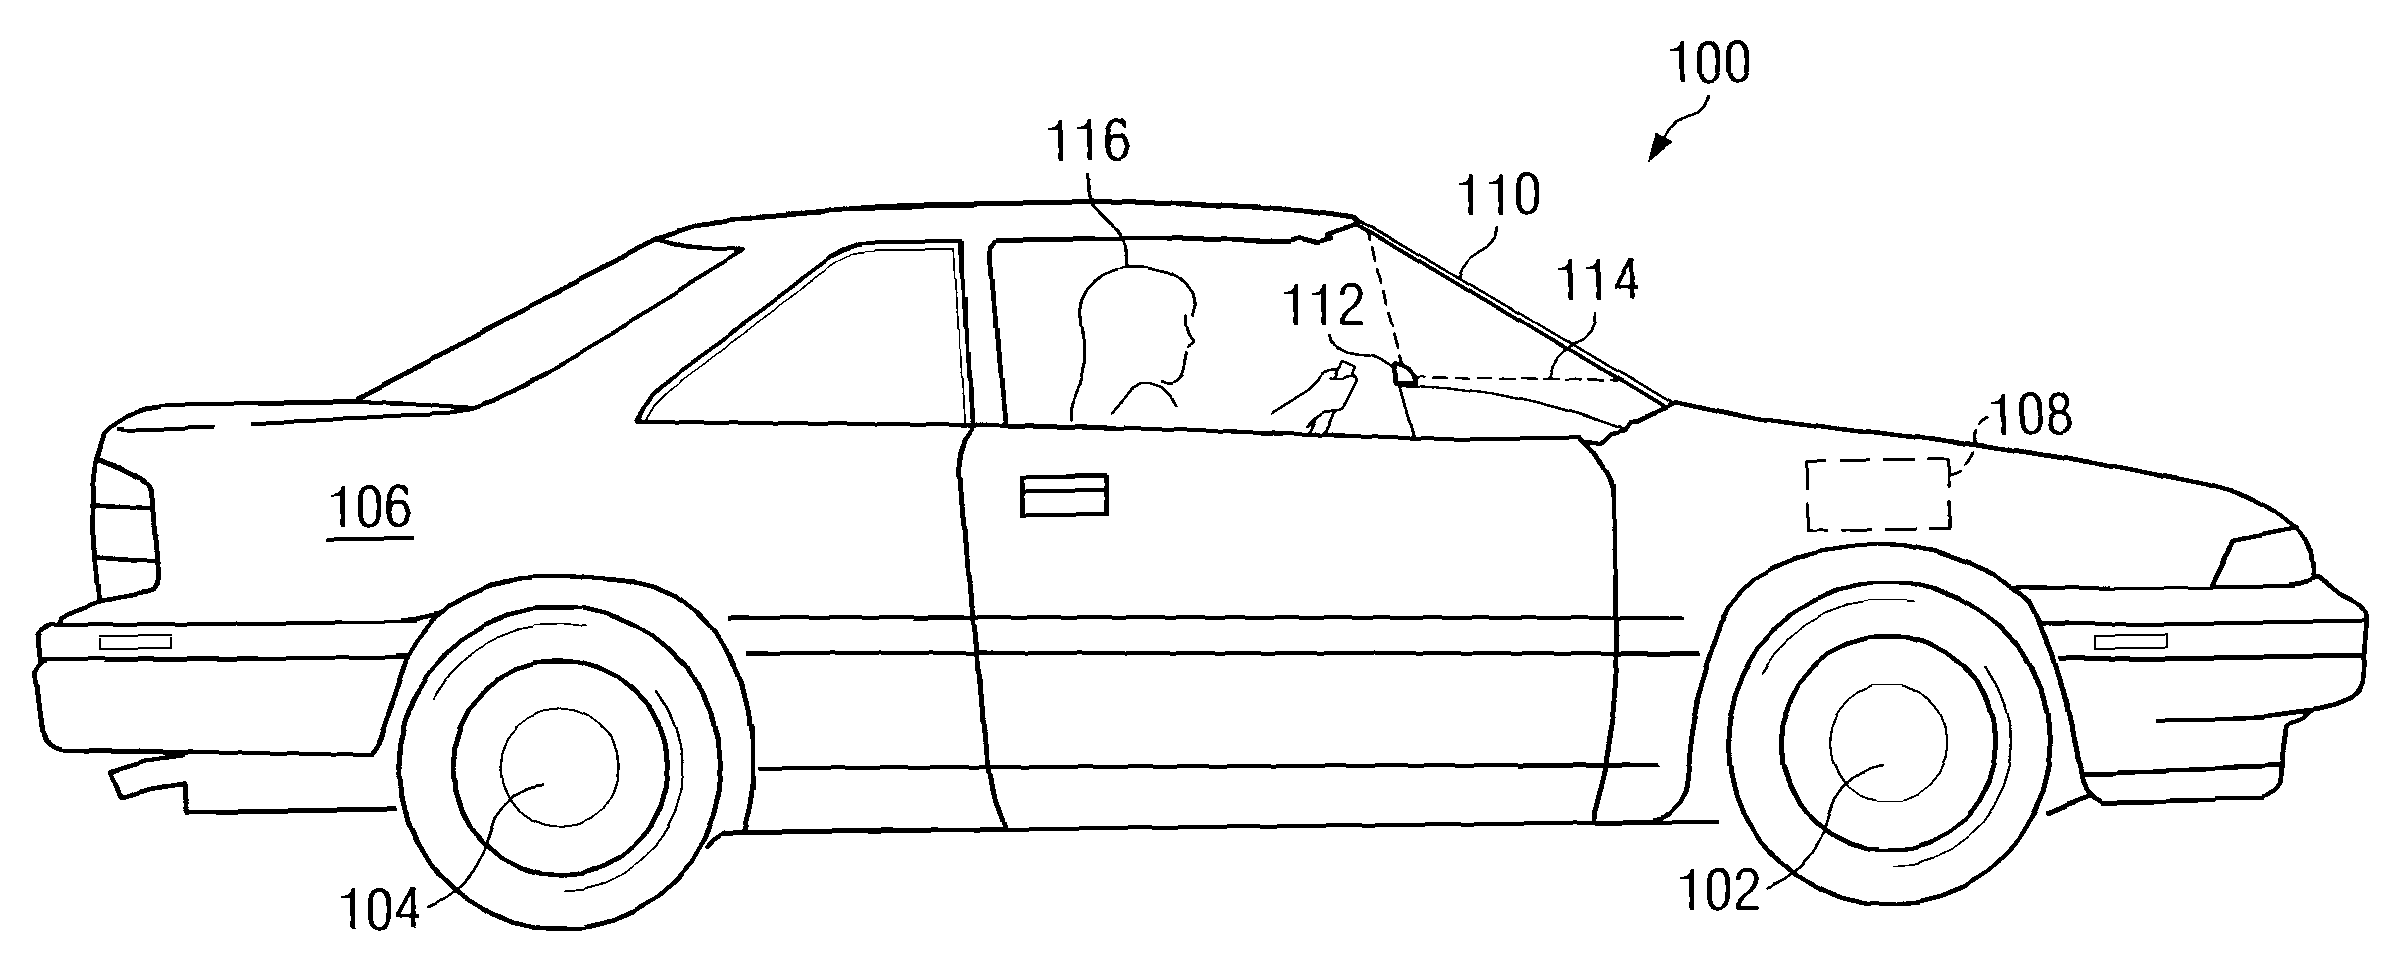 Automobile windshield display